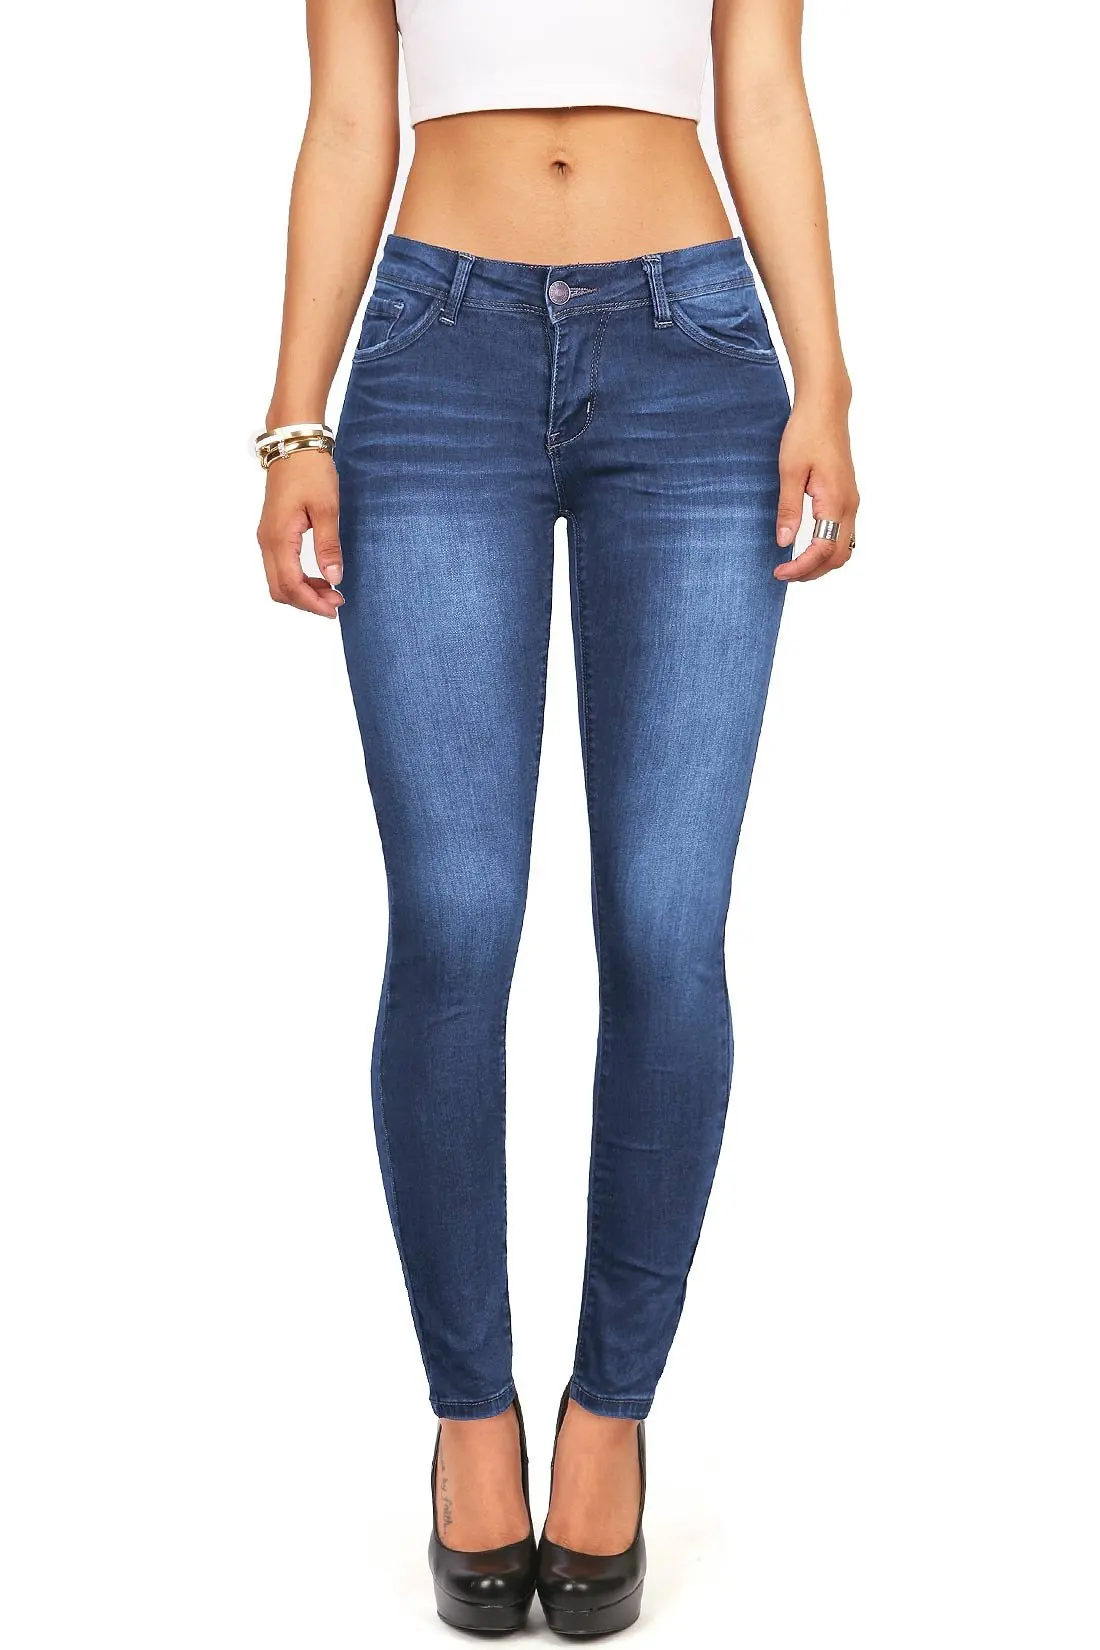 Cheap Low Rise Brazilian Jeans, find Low Rise Brazilian Jeans deals on ...